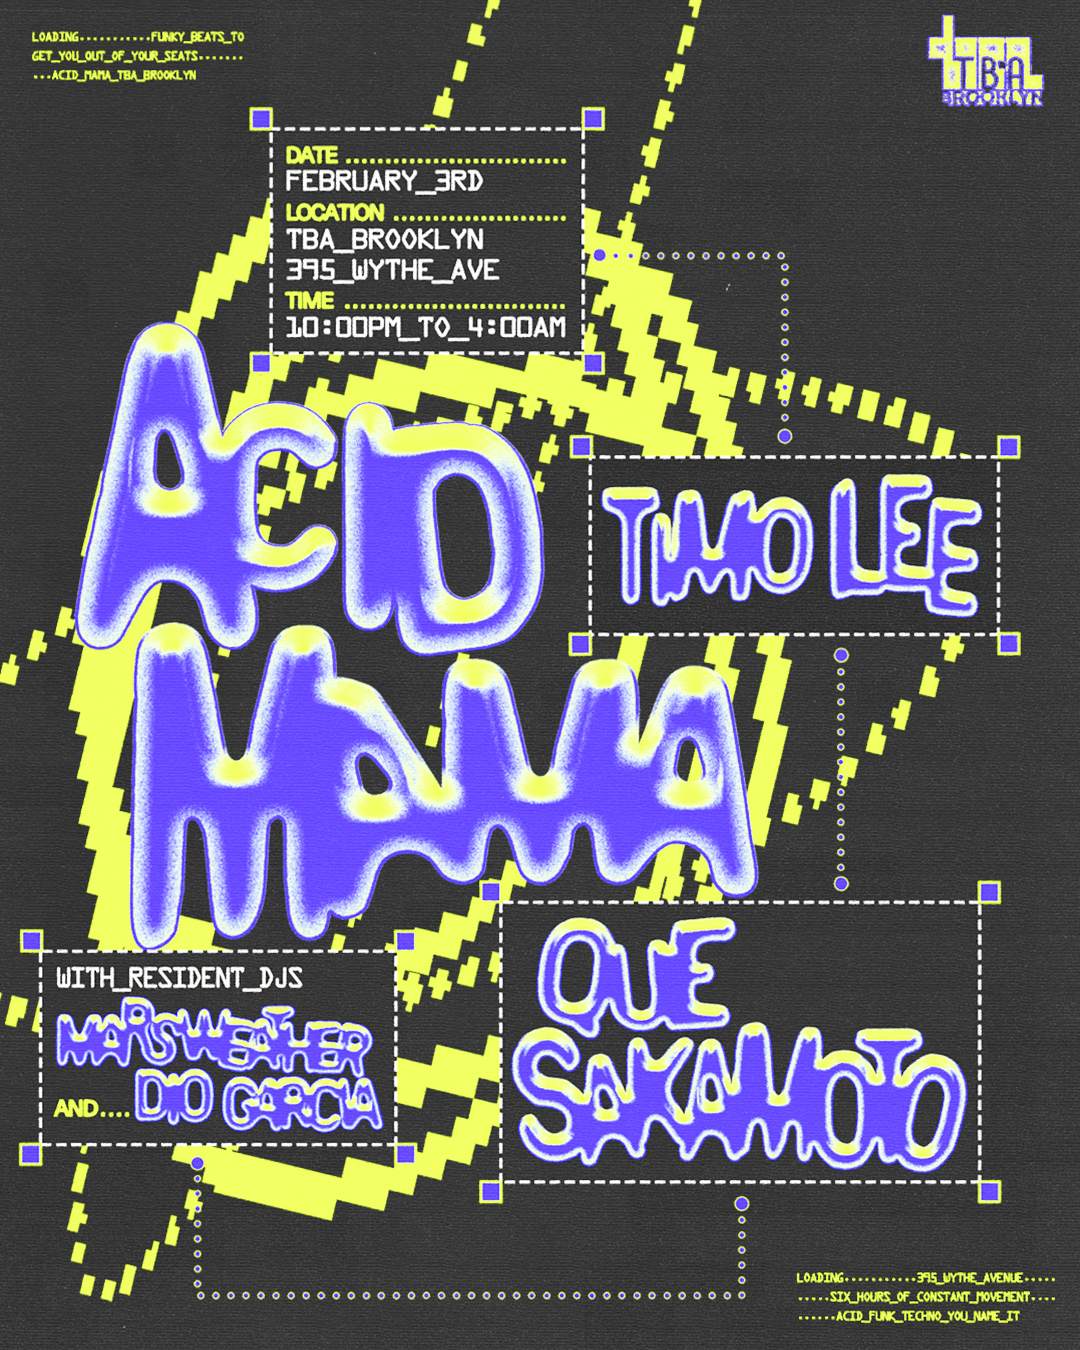 Acid Mama: Que Sakamoto, Timo Lee, Dio Garcia, Marsweather - Página frontal